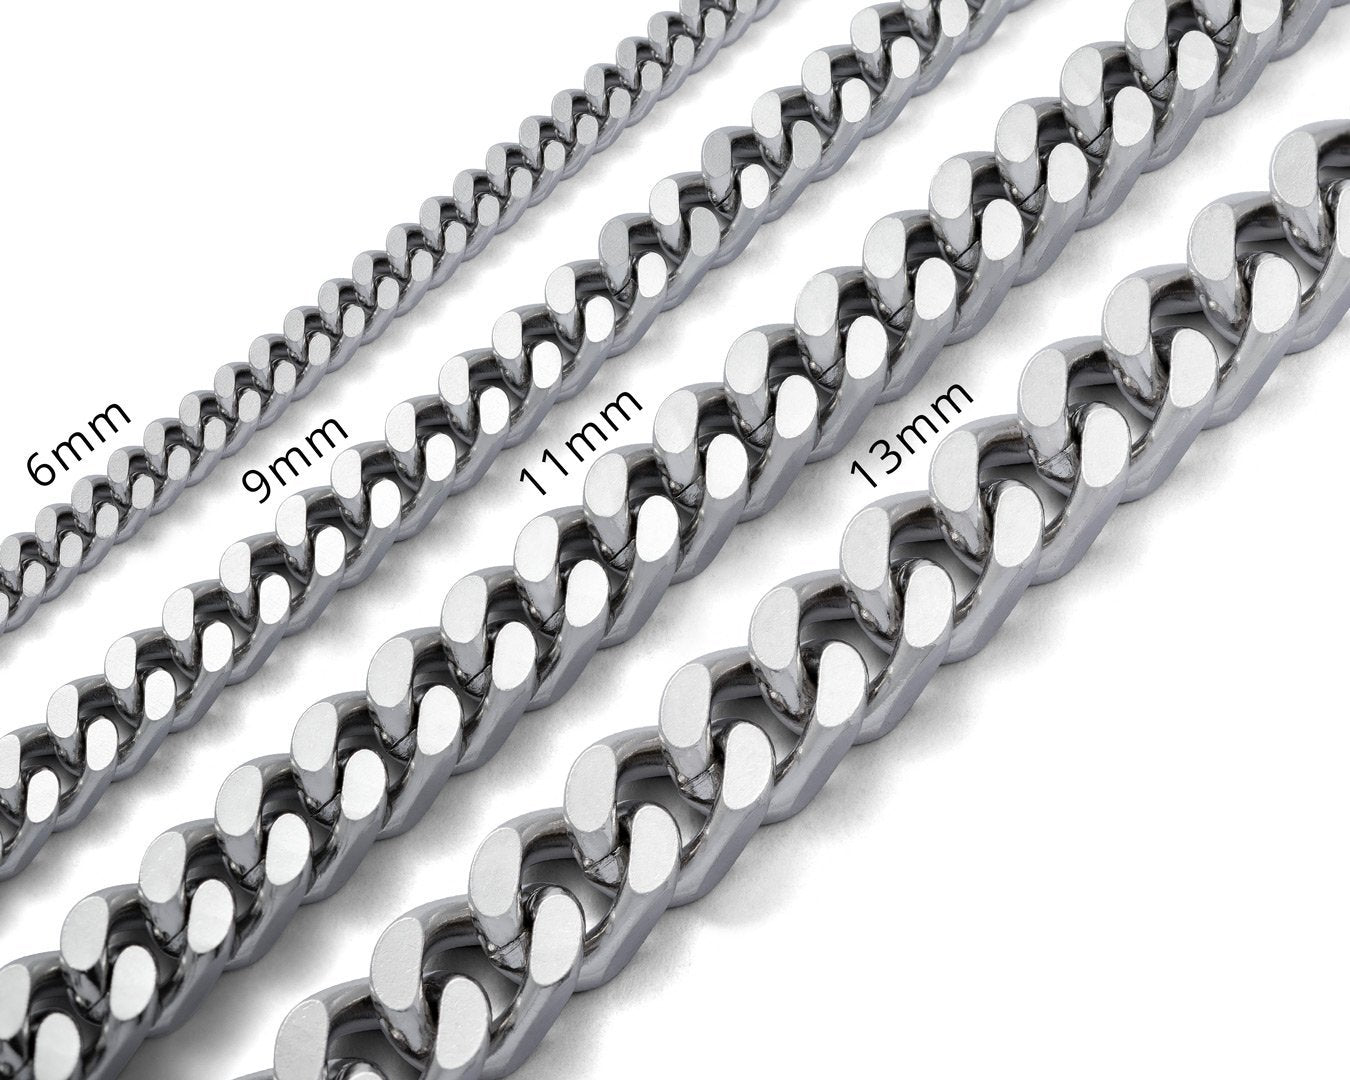 11mm Enamel cuban link necklace chain White/Silver